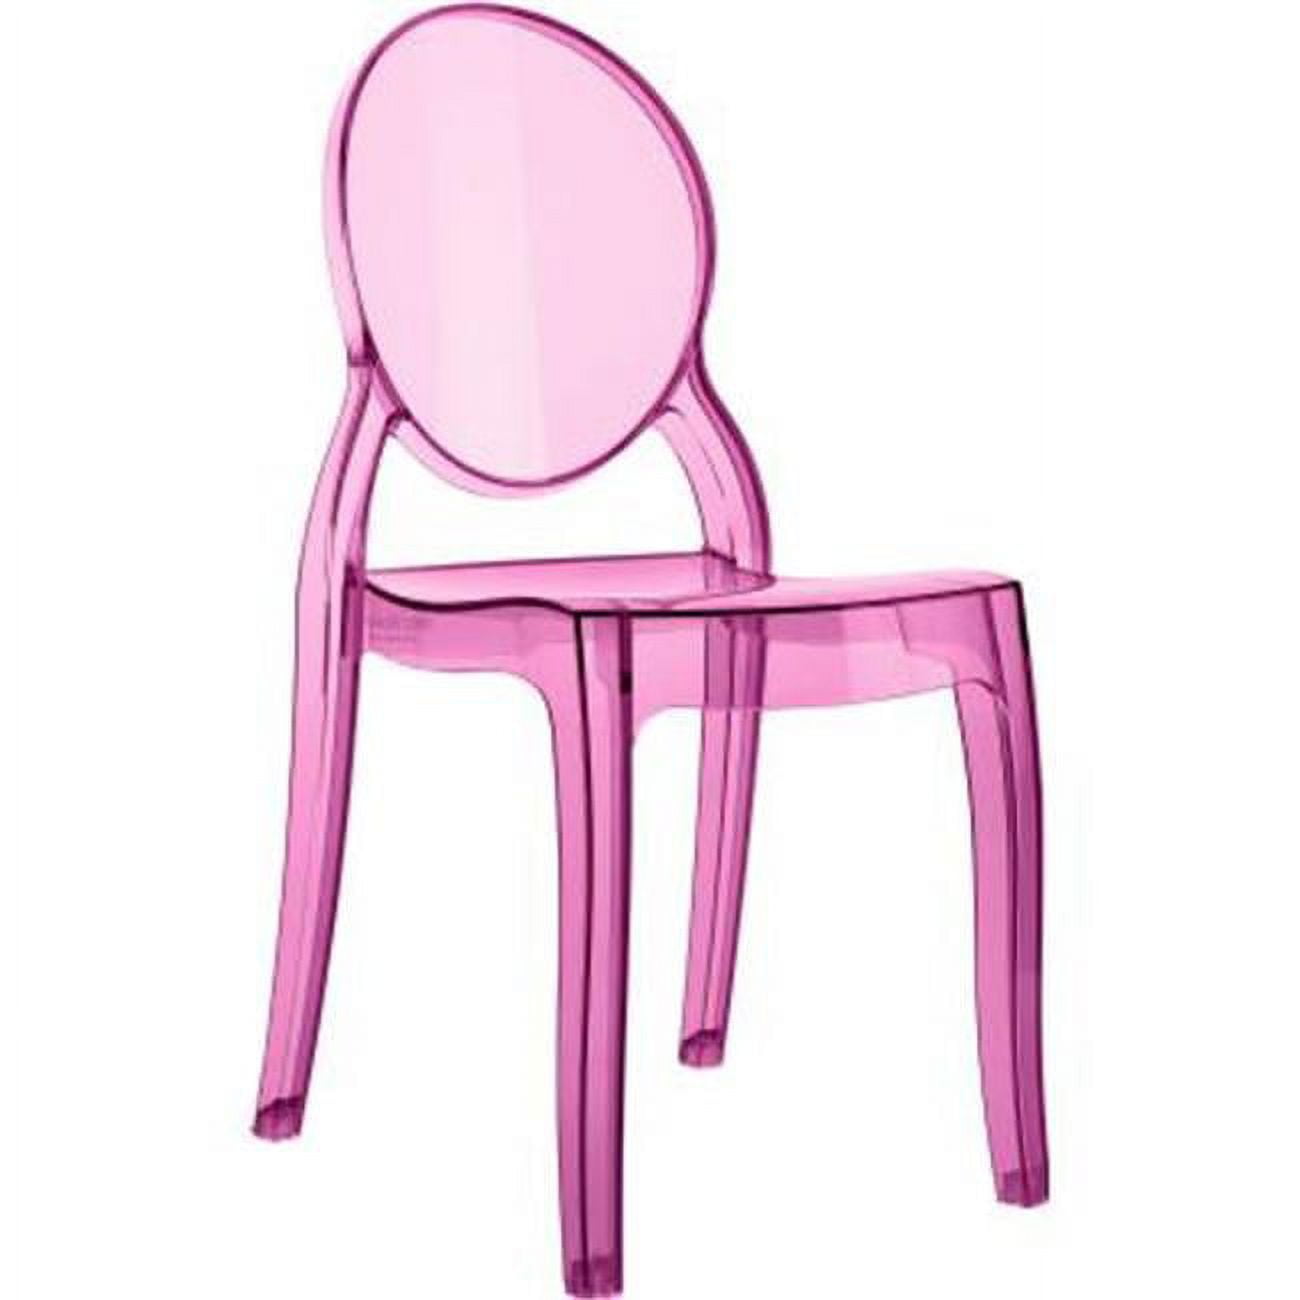 Isp051-tpnk Baby Elizabeth Kids Chair, Transparent Pink